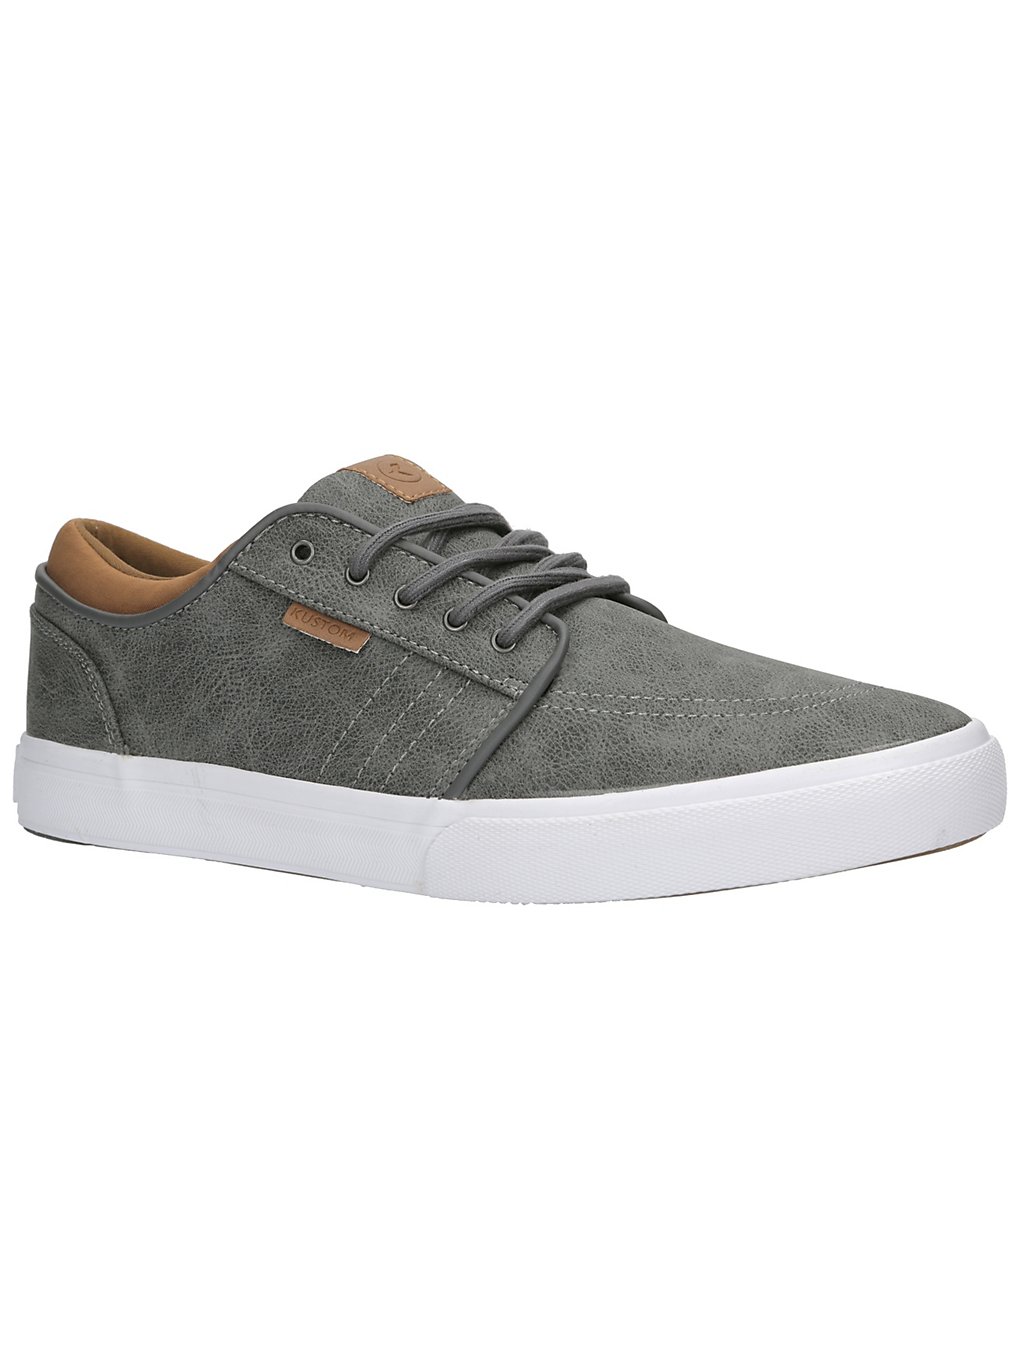 Kustom Remark 2 Sneakers dark grey